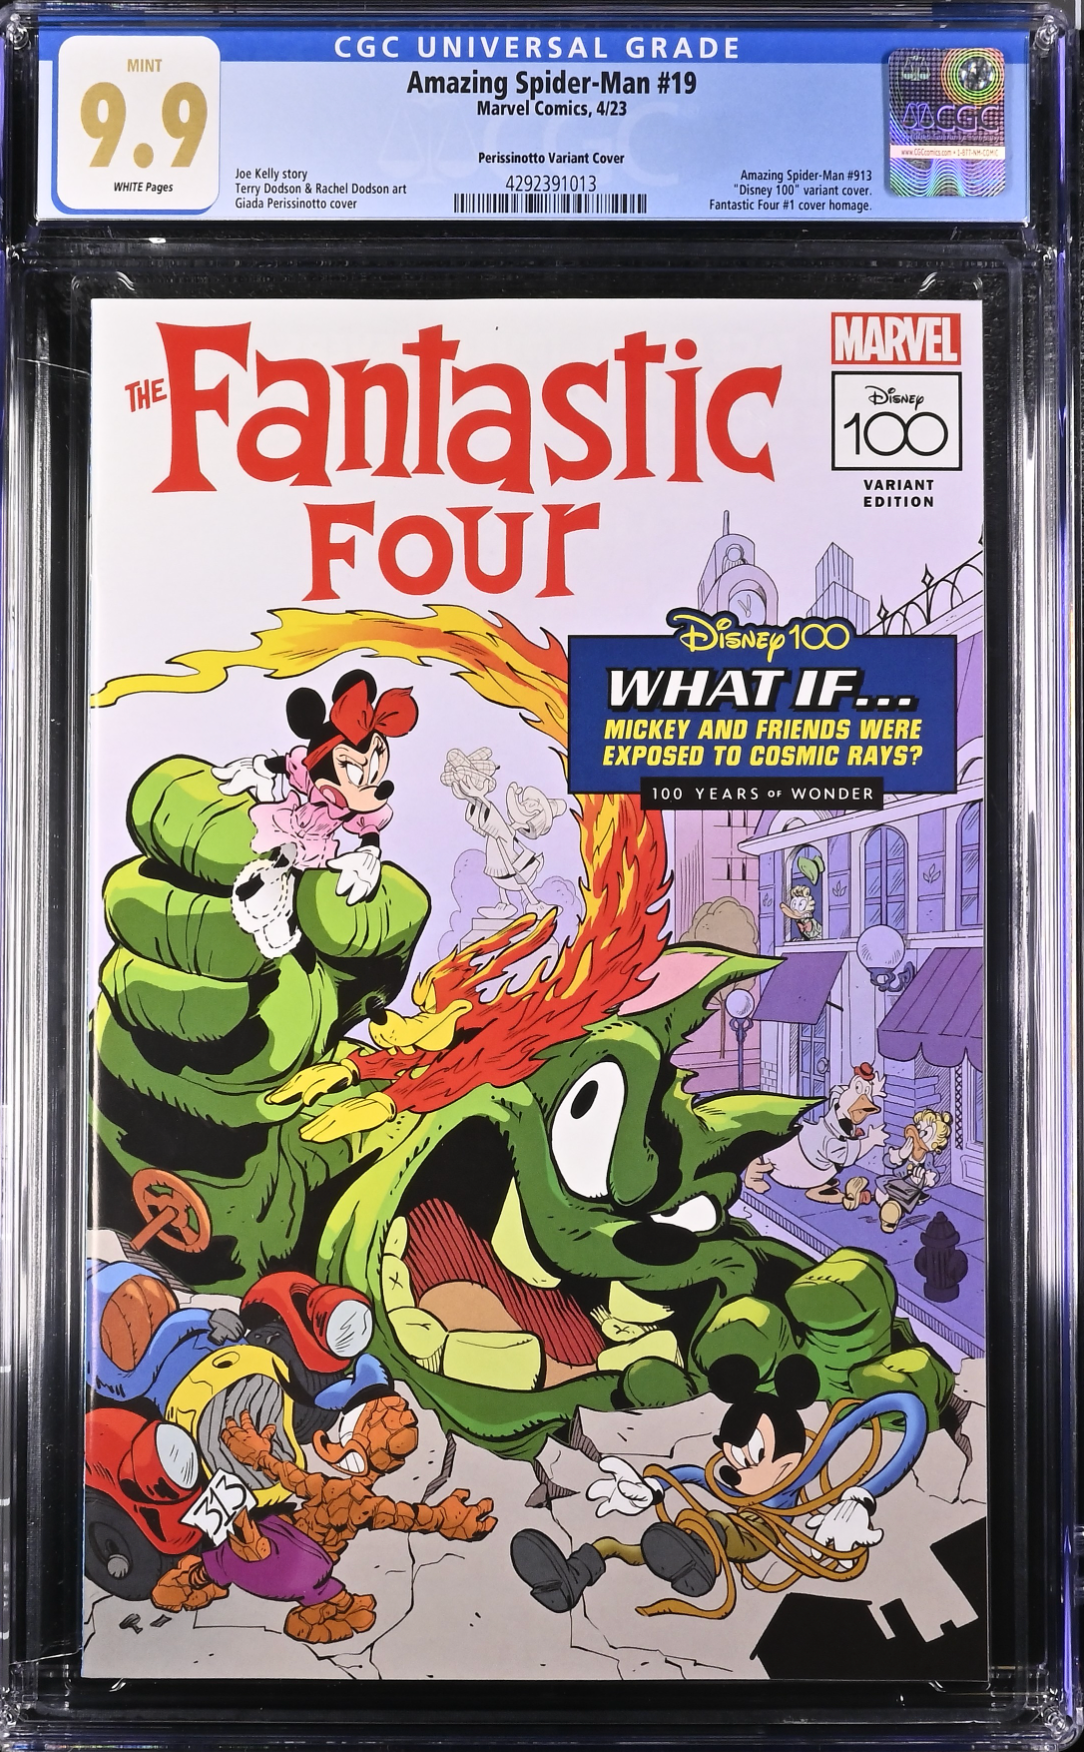 Amazing Spider-Man #19 Disney 100 Variant CGC 9.9